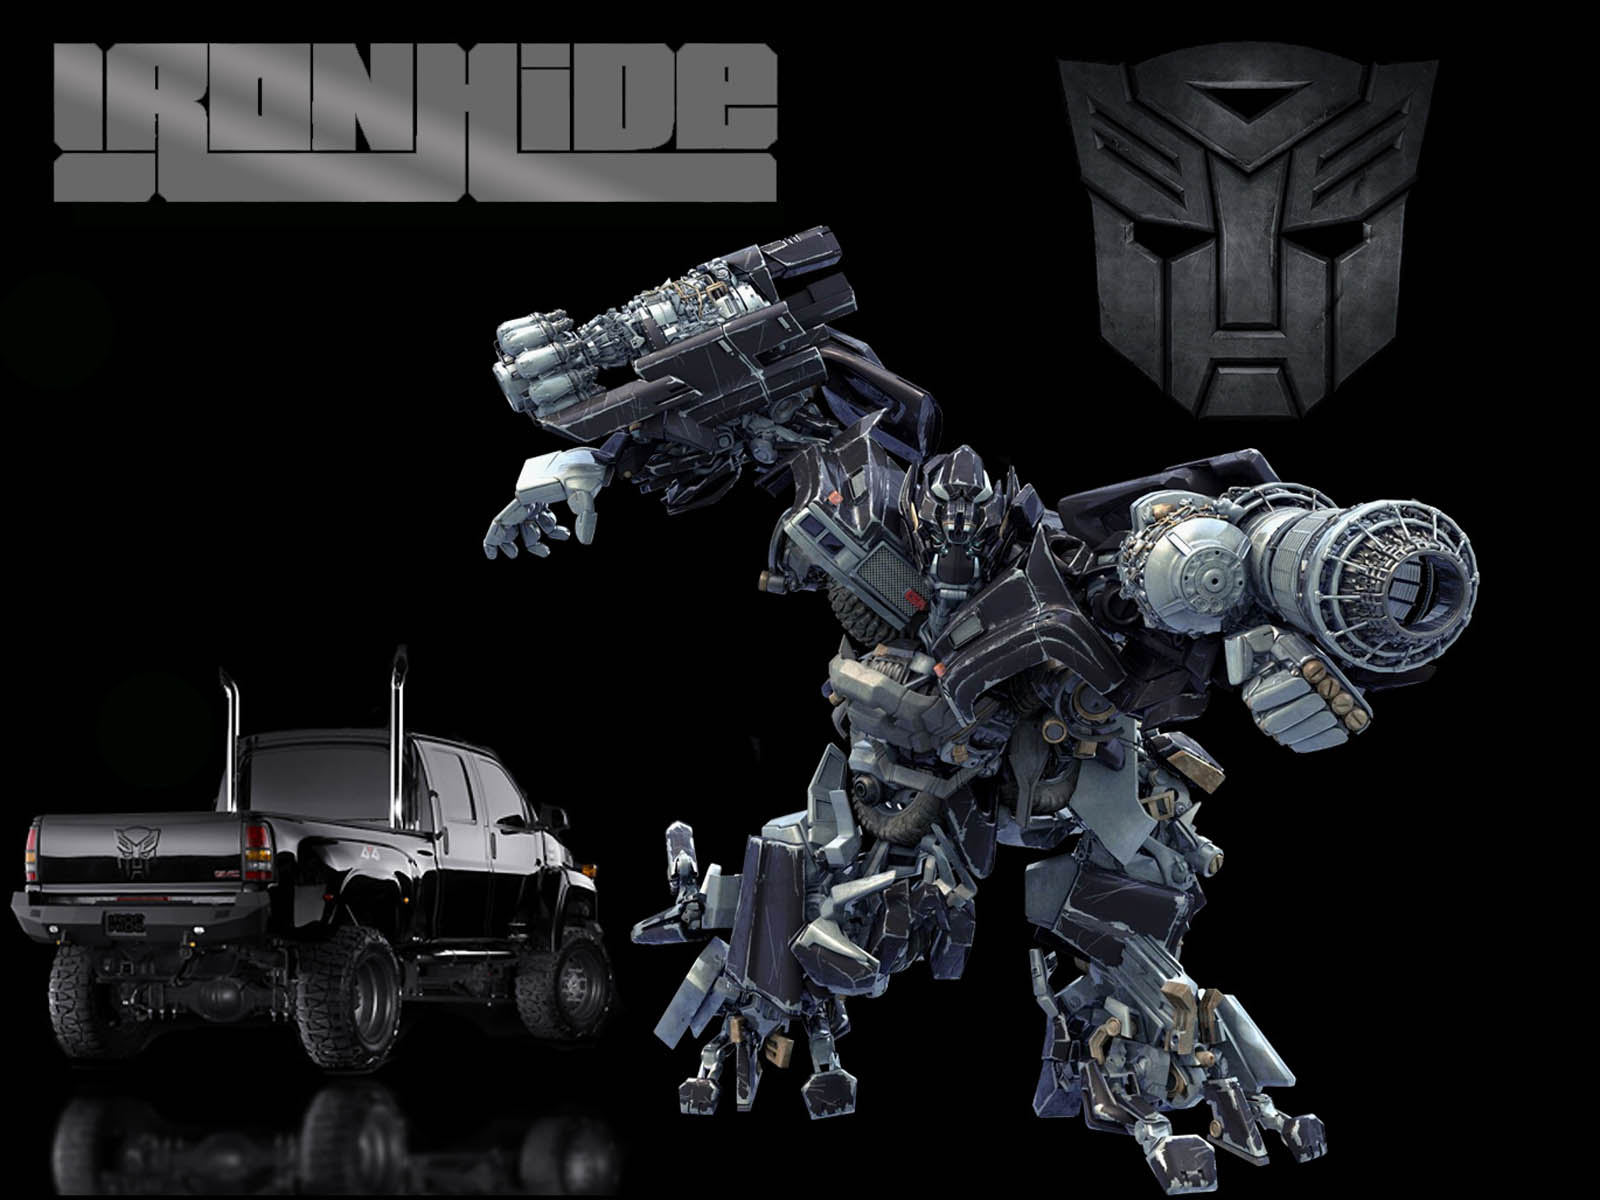 Transformers 4 Telugu Dubbed 720p Dimensionsl